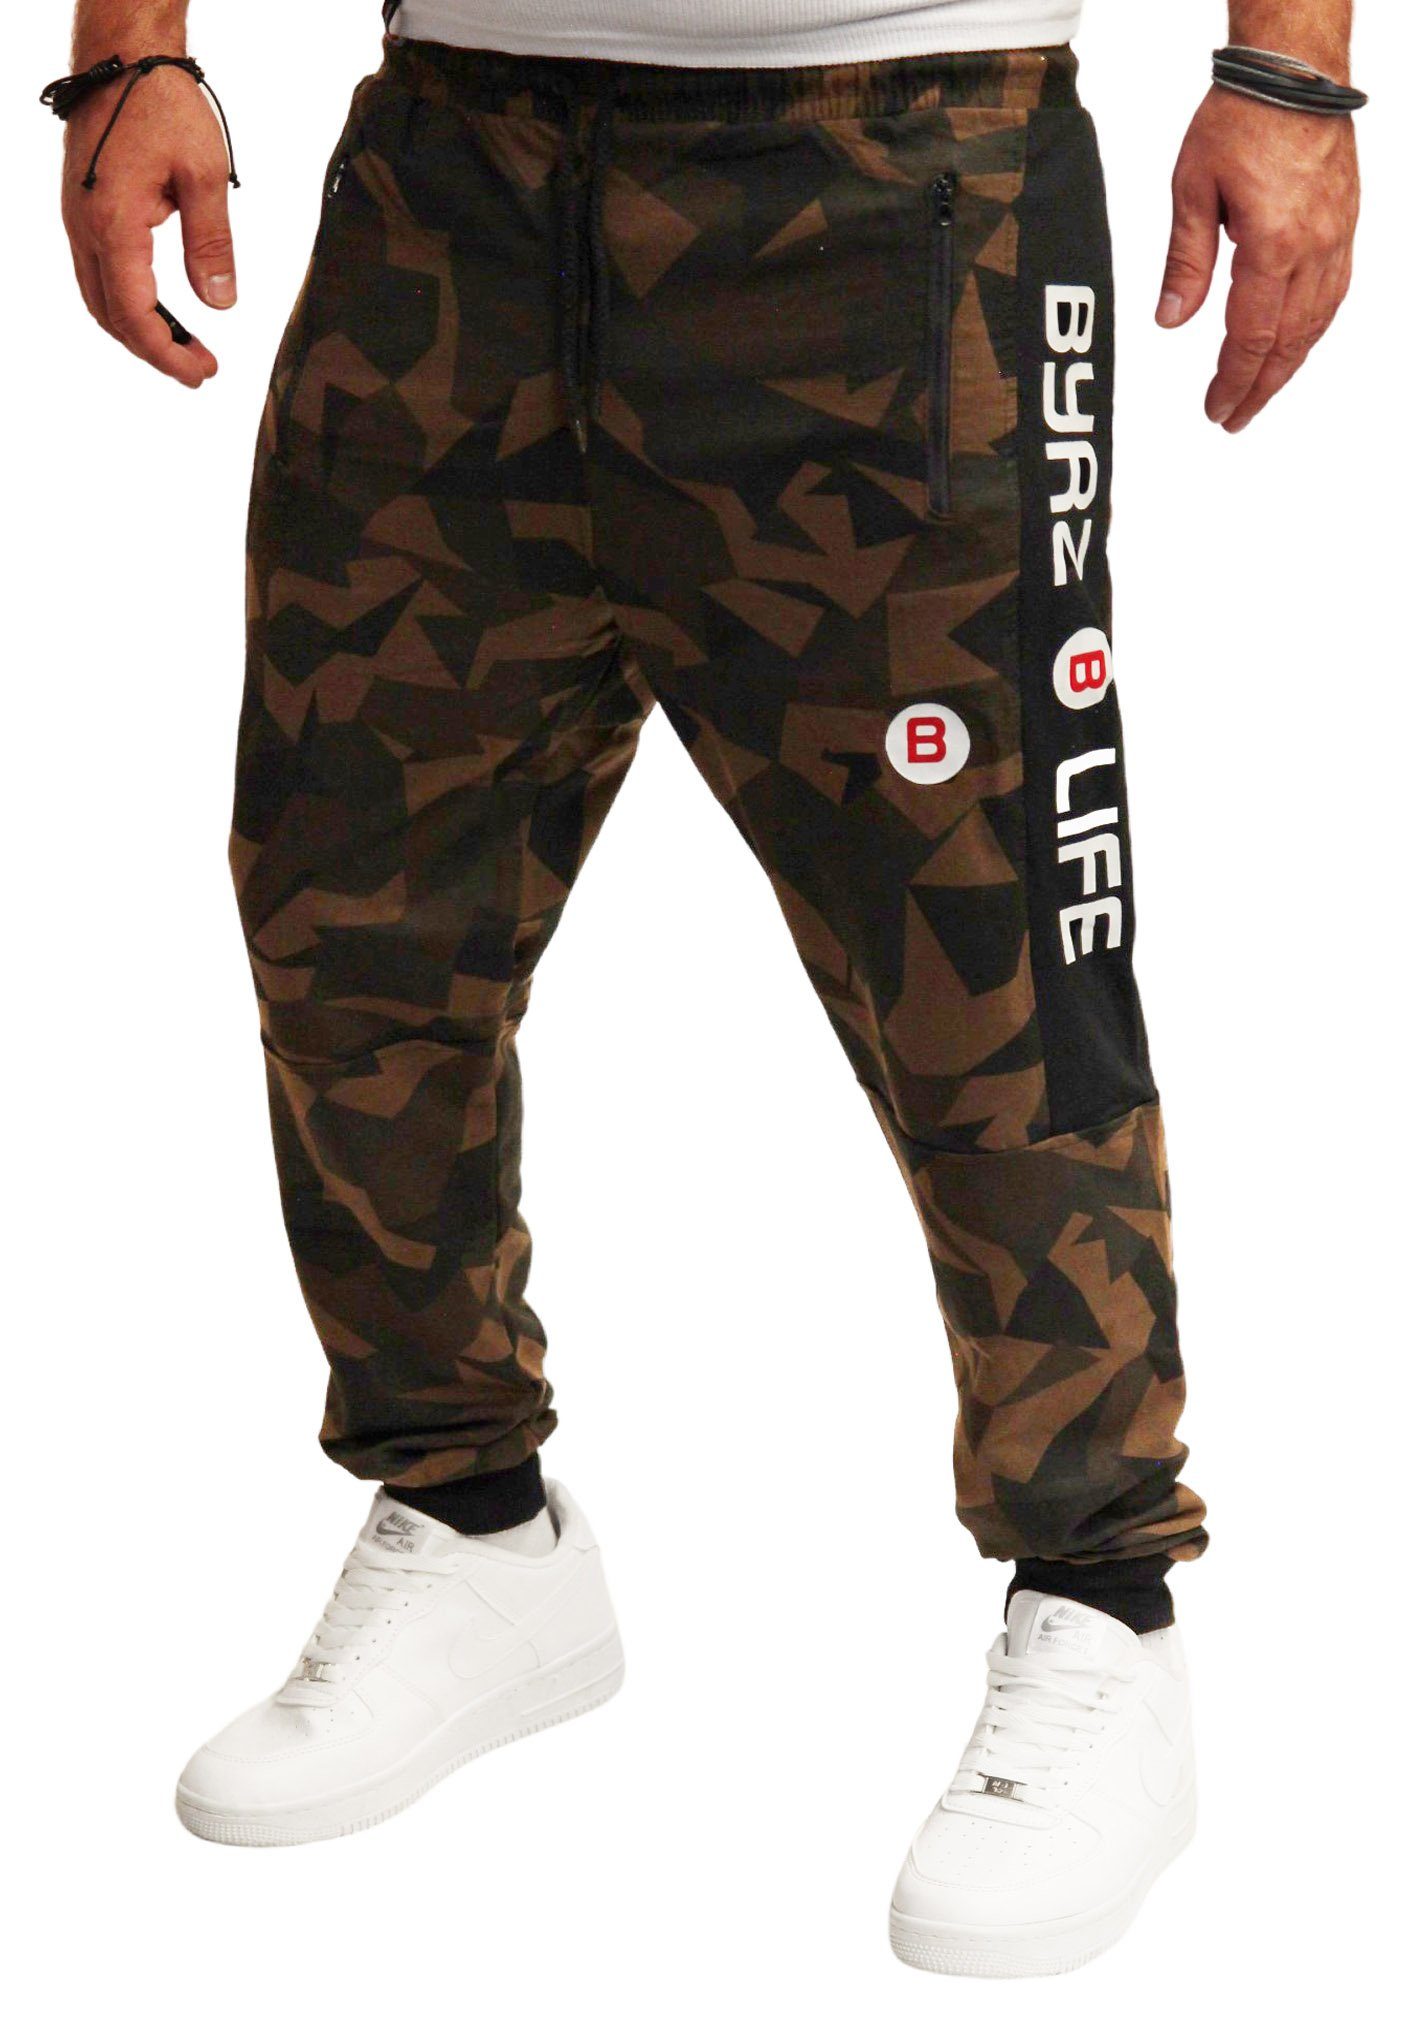 Sport Army Hose RMK Trainingshose Herren (H.12) Jogginghose Camouflage Tarn Camouflage Fitnesshose